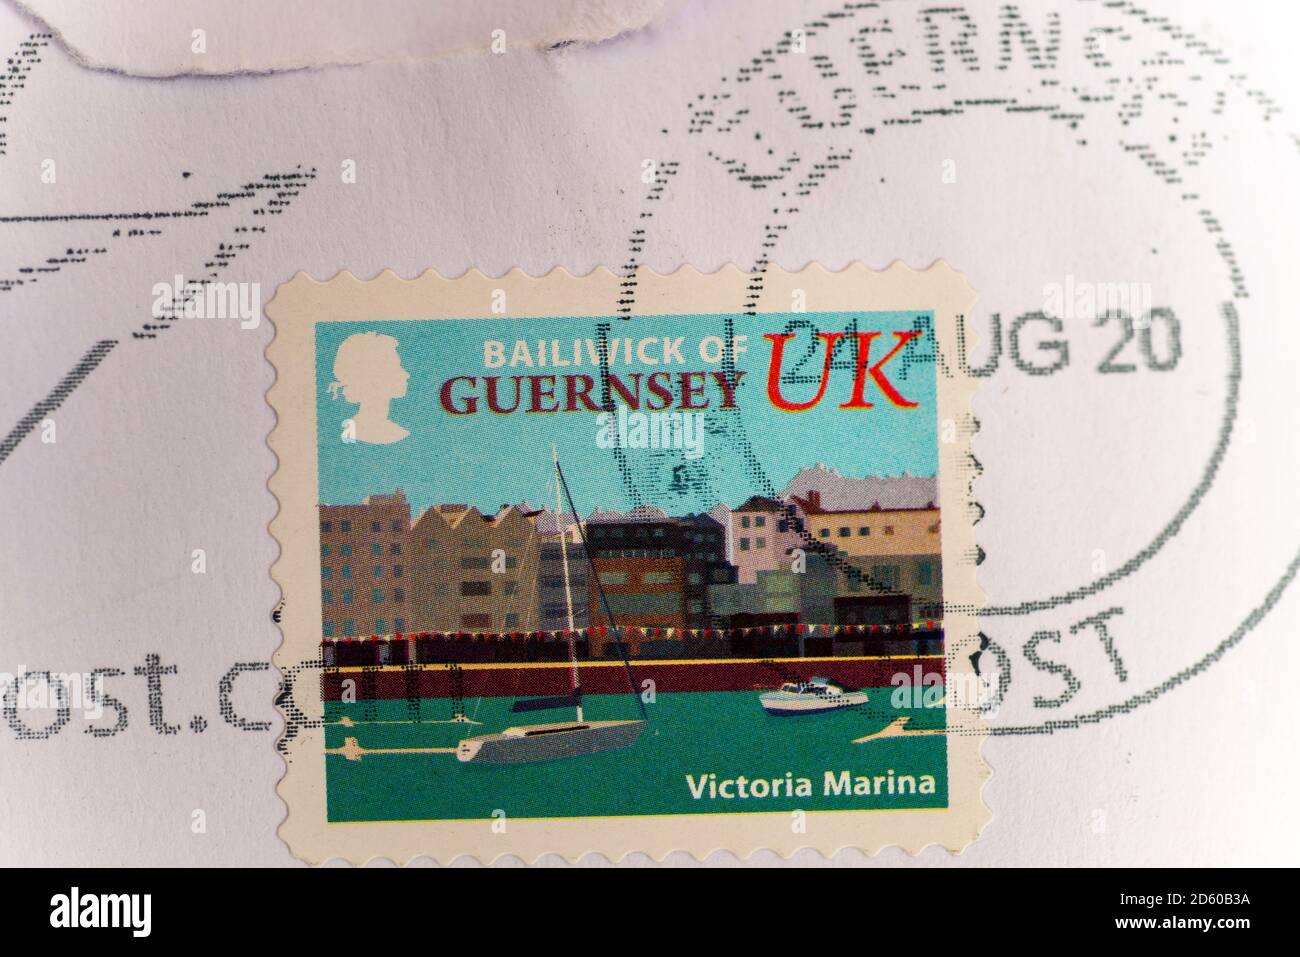 Postal stamp Guernsey Stock Photo